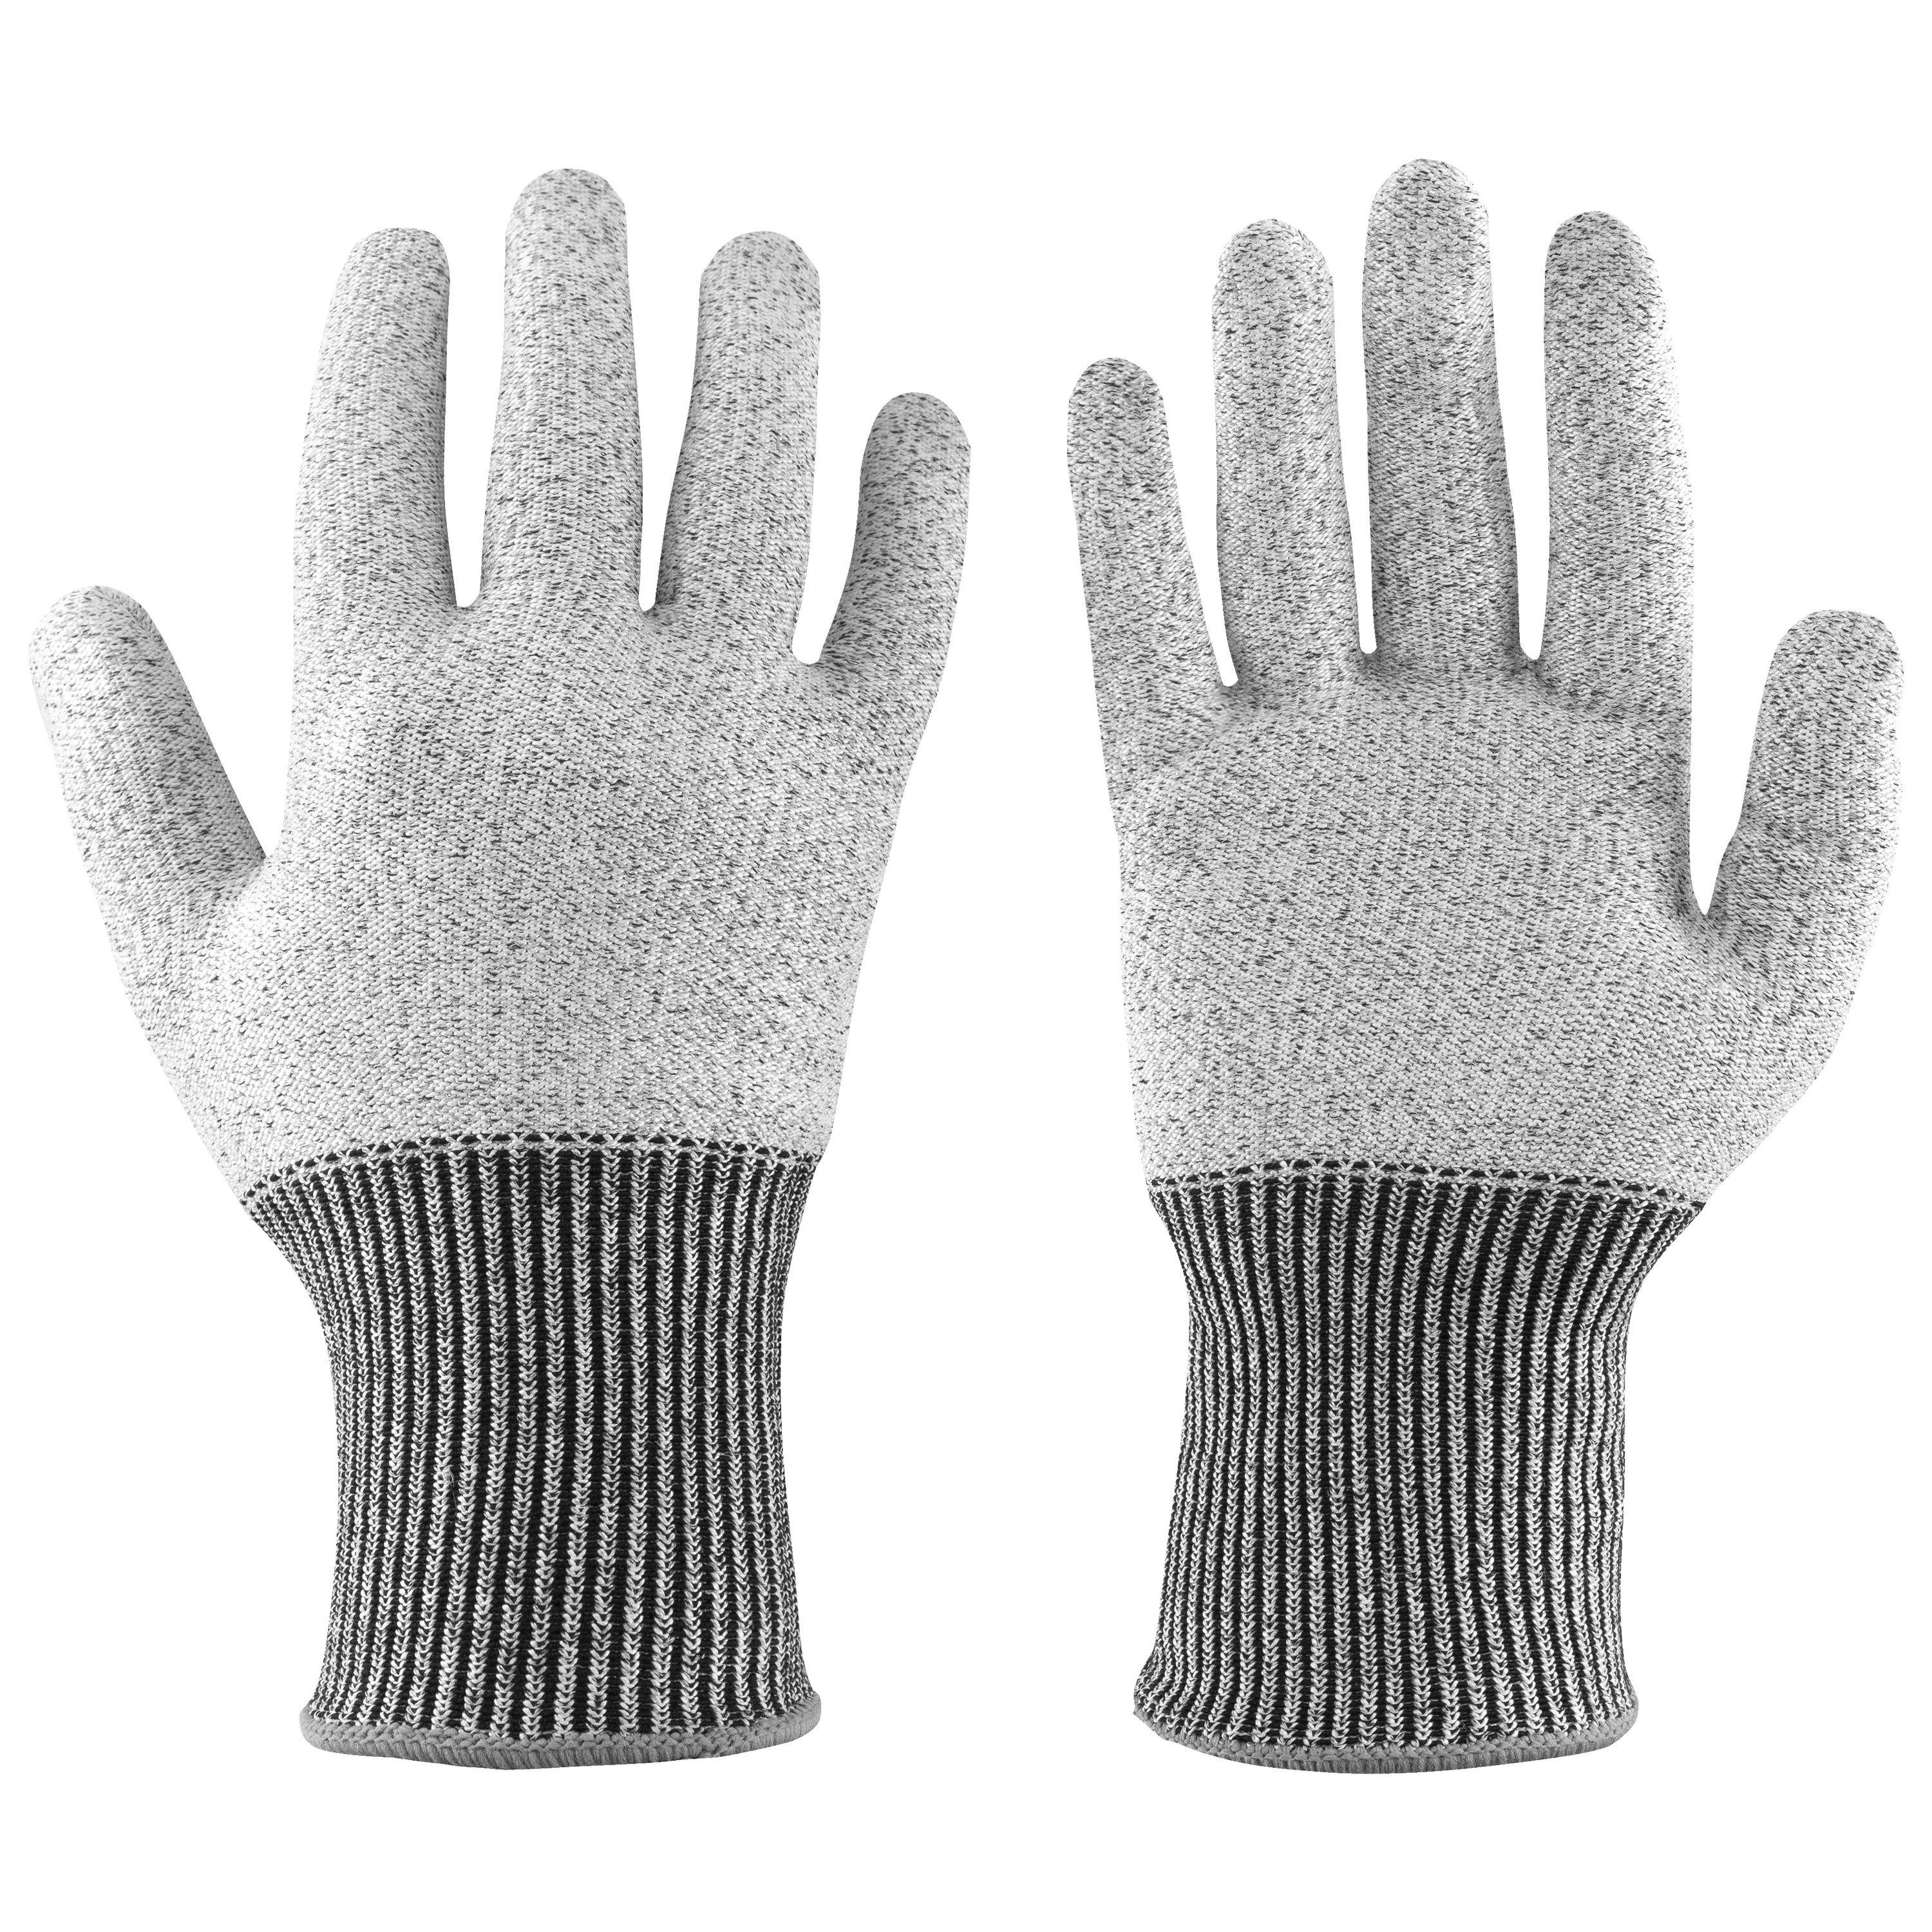 Buy ZWILLING Z-Cut Cut resistant glove